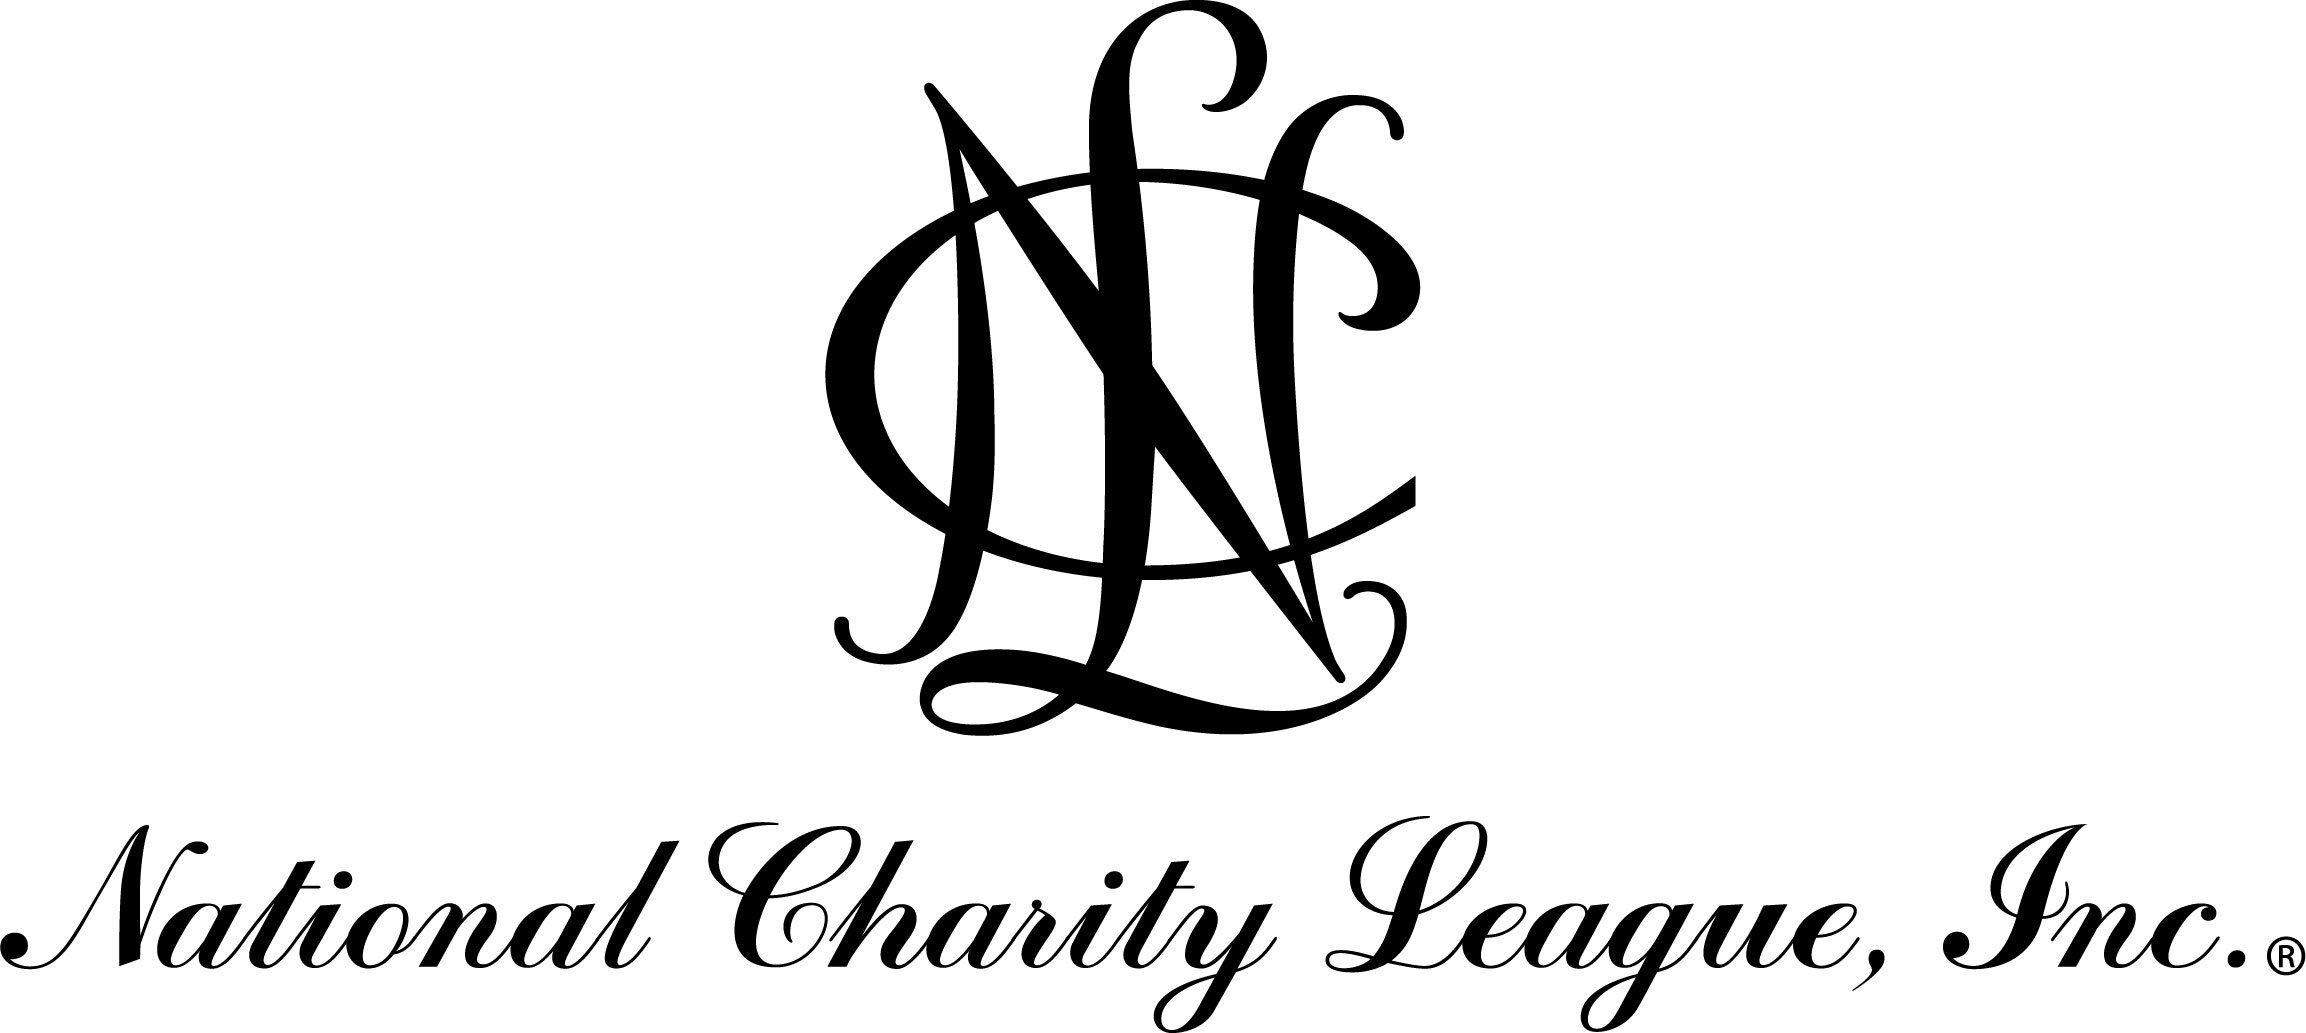 National Charity League (1).jpg